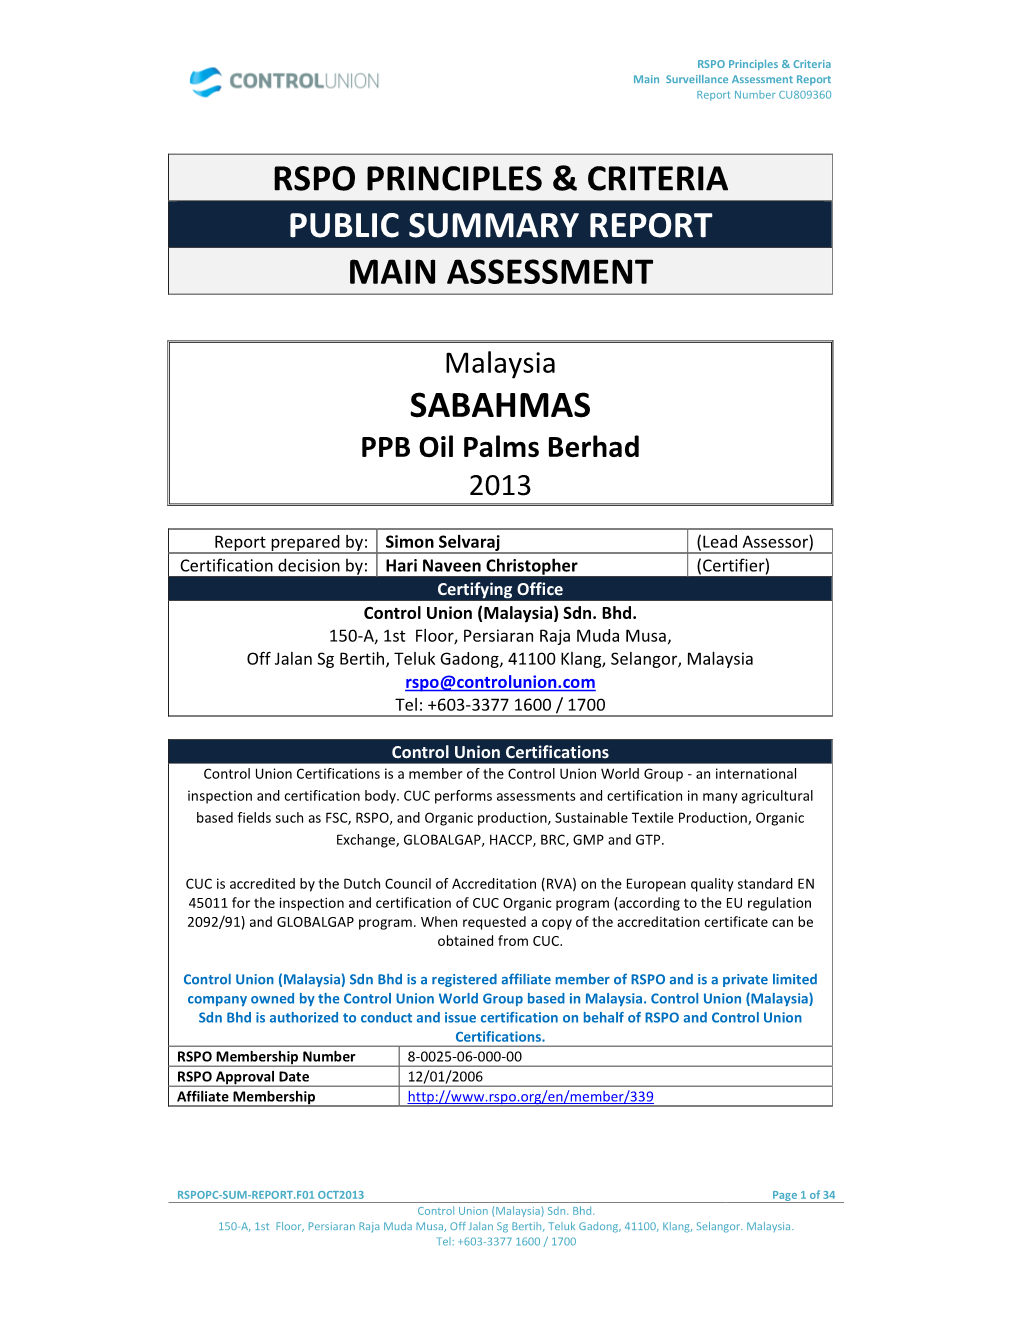 Rspo Principles & Criteria Public Summary Report Main Assessment Sabahmas